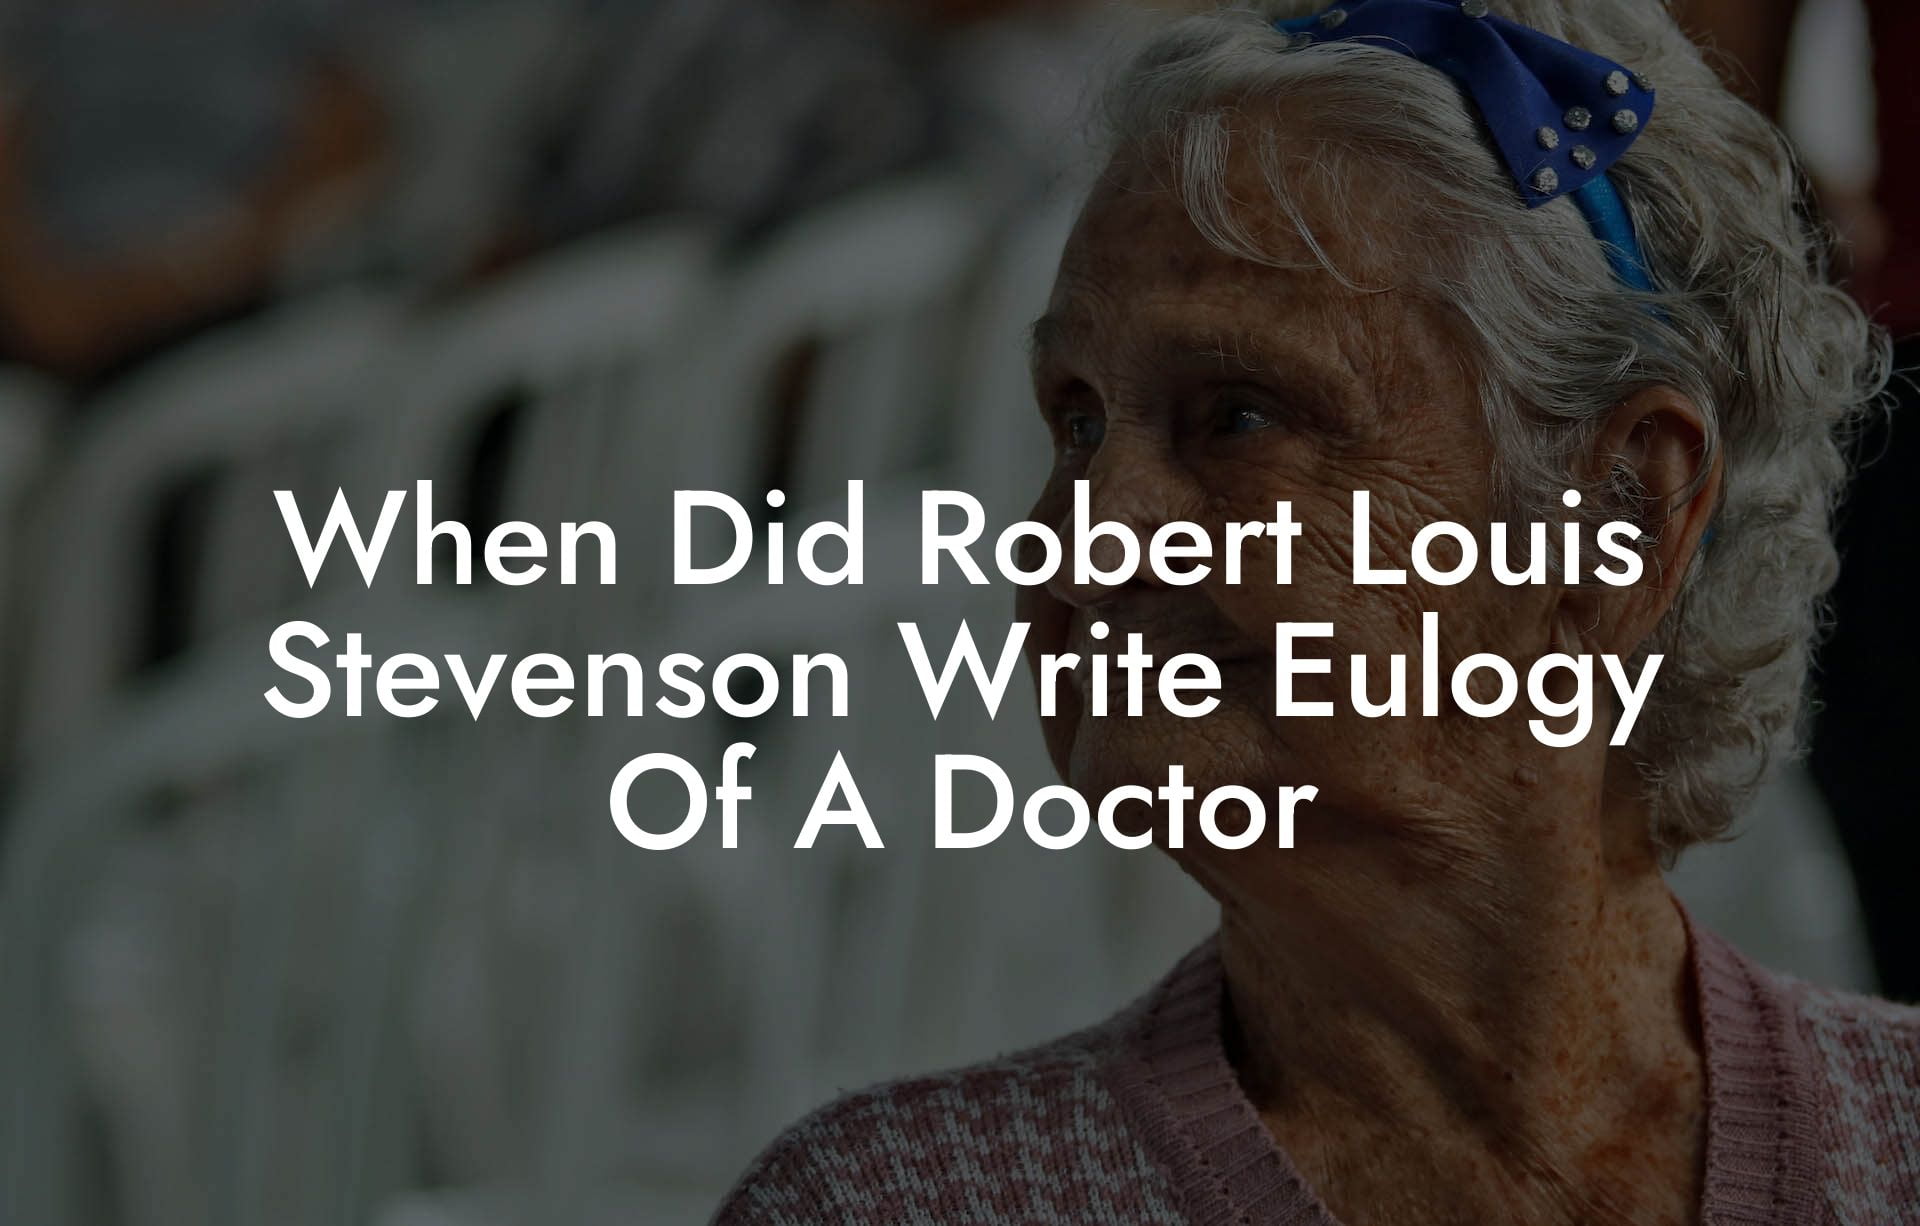 When Did Robert Louis Stevenson Write Eulogy Of A Doctor